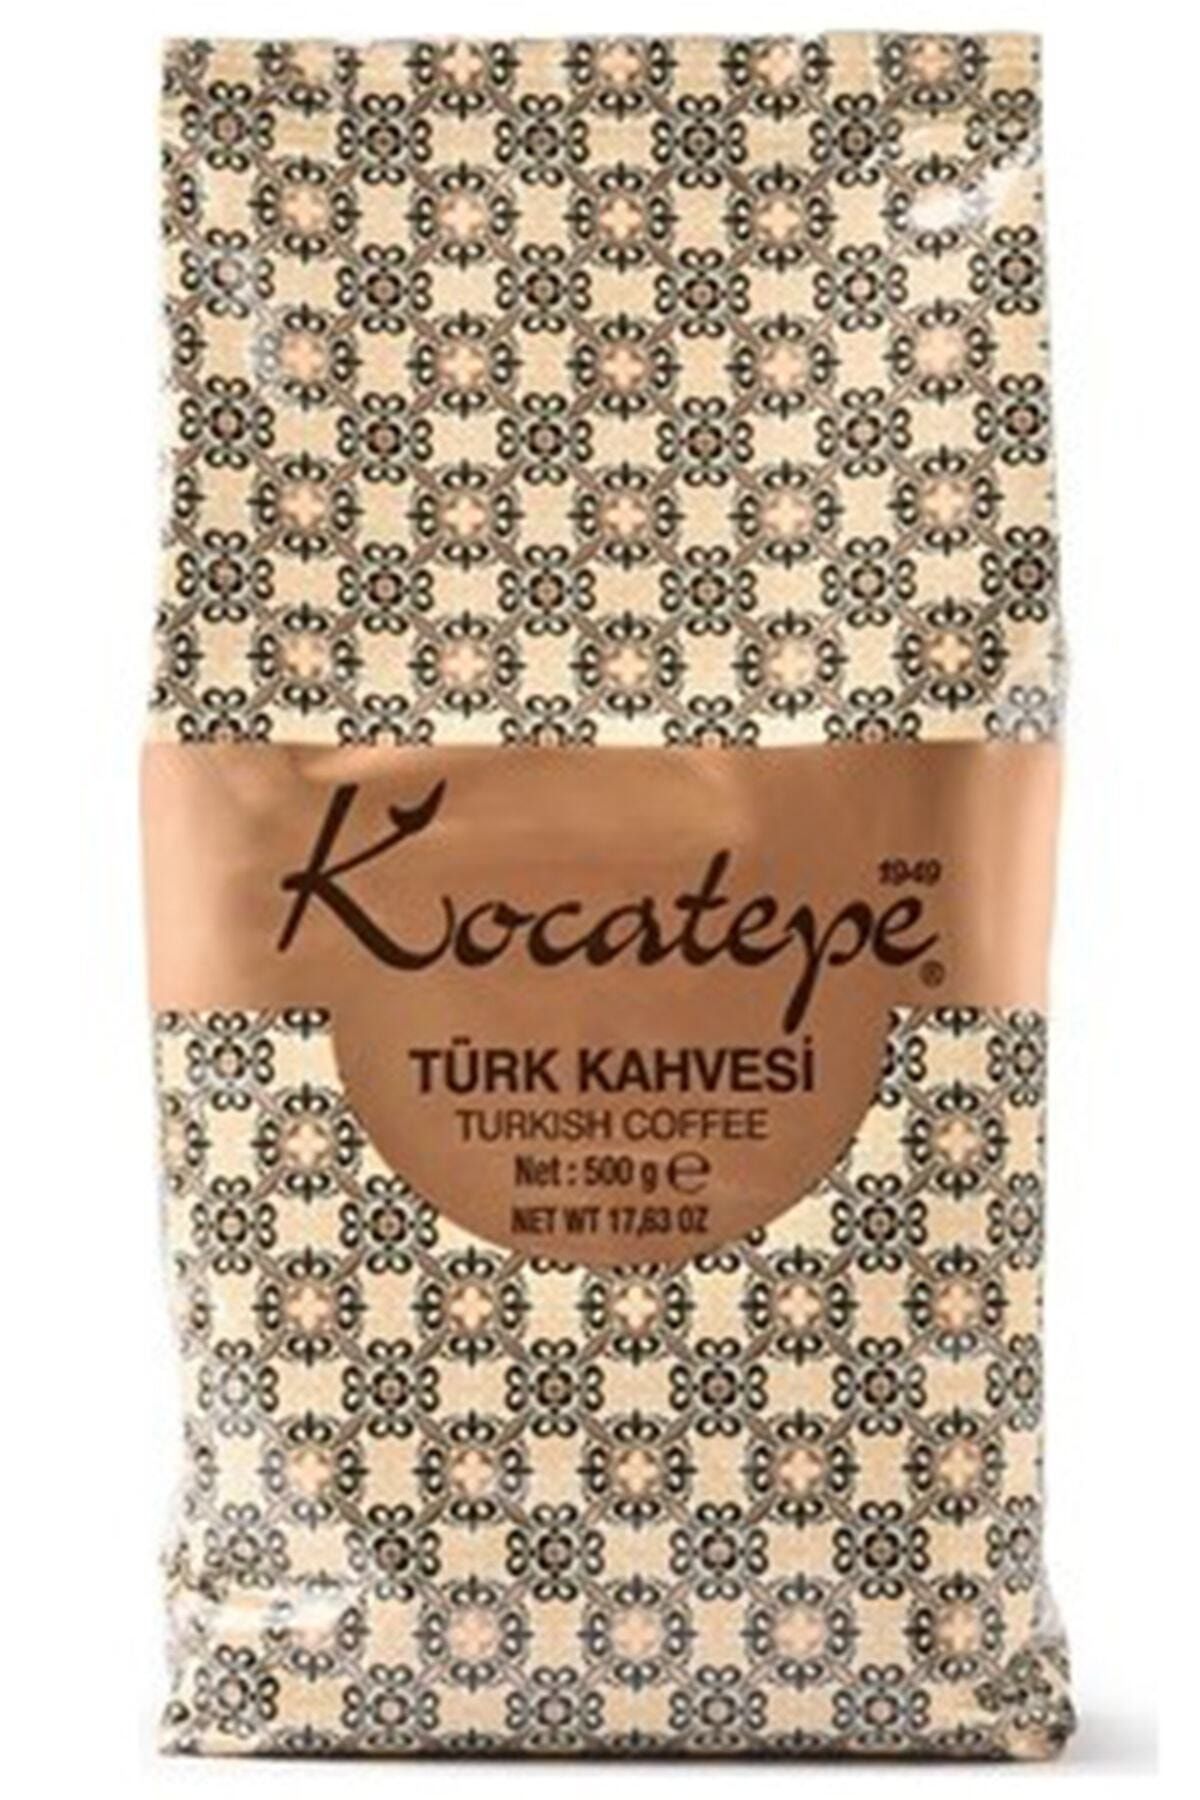 KOCATEPE KAHVE Kocatepe Türk Kahvesi 500 Gr Folyo